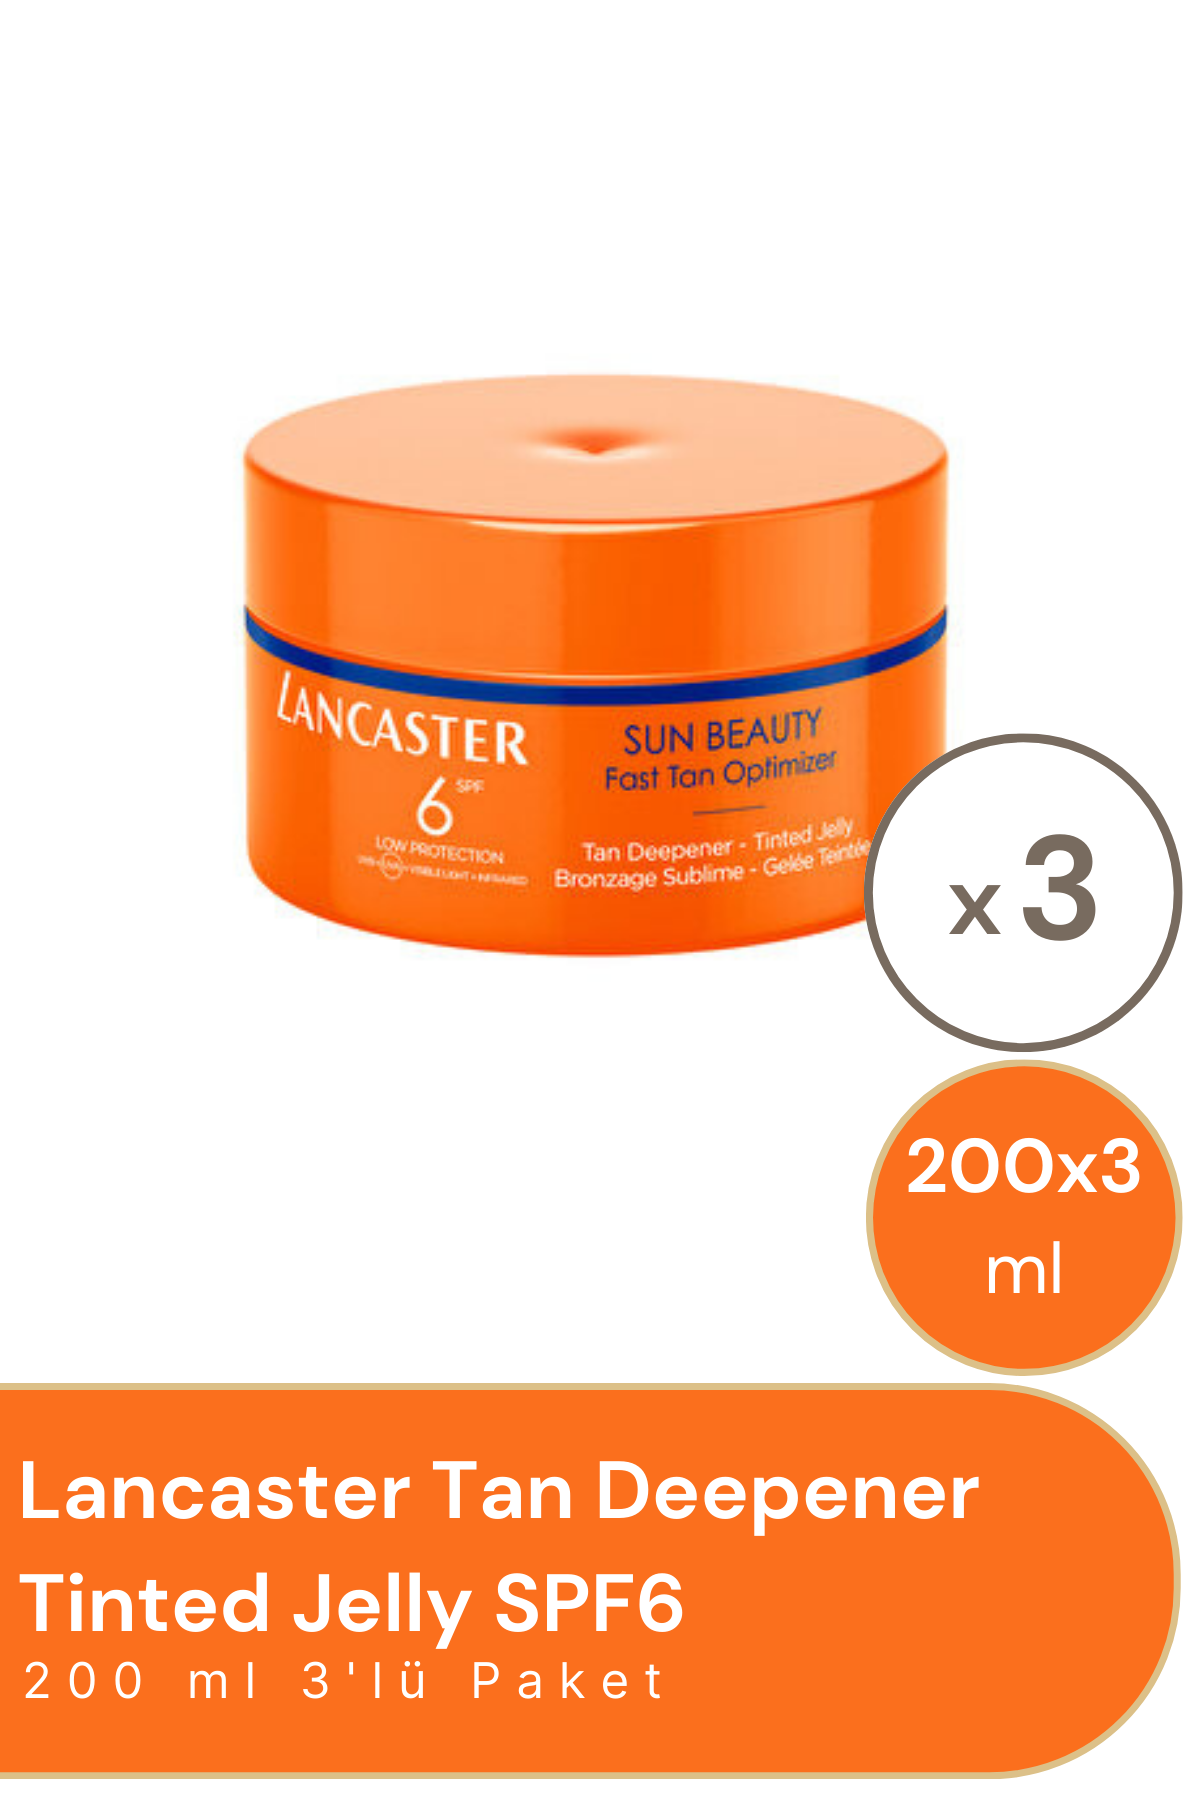 Lancaster Sun Beauty Tan Deepener Tinted Jelly SPF6 200 ml